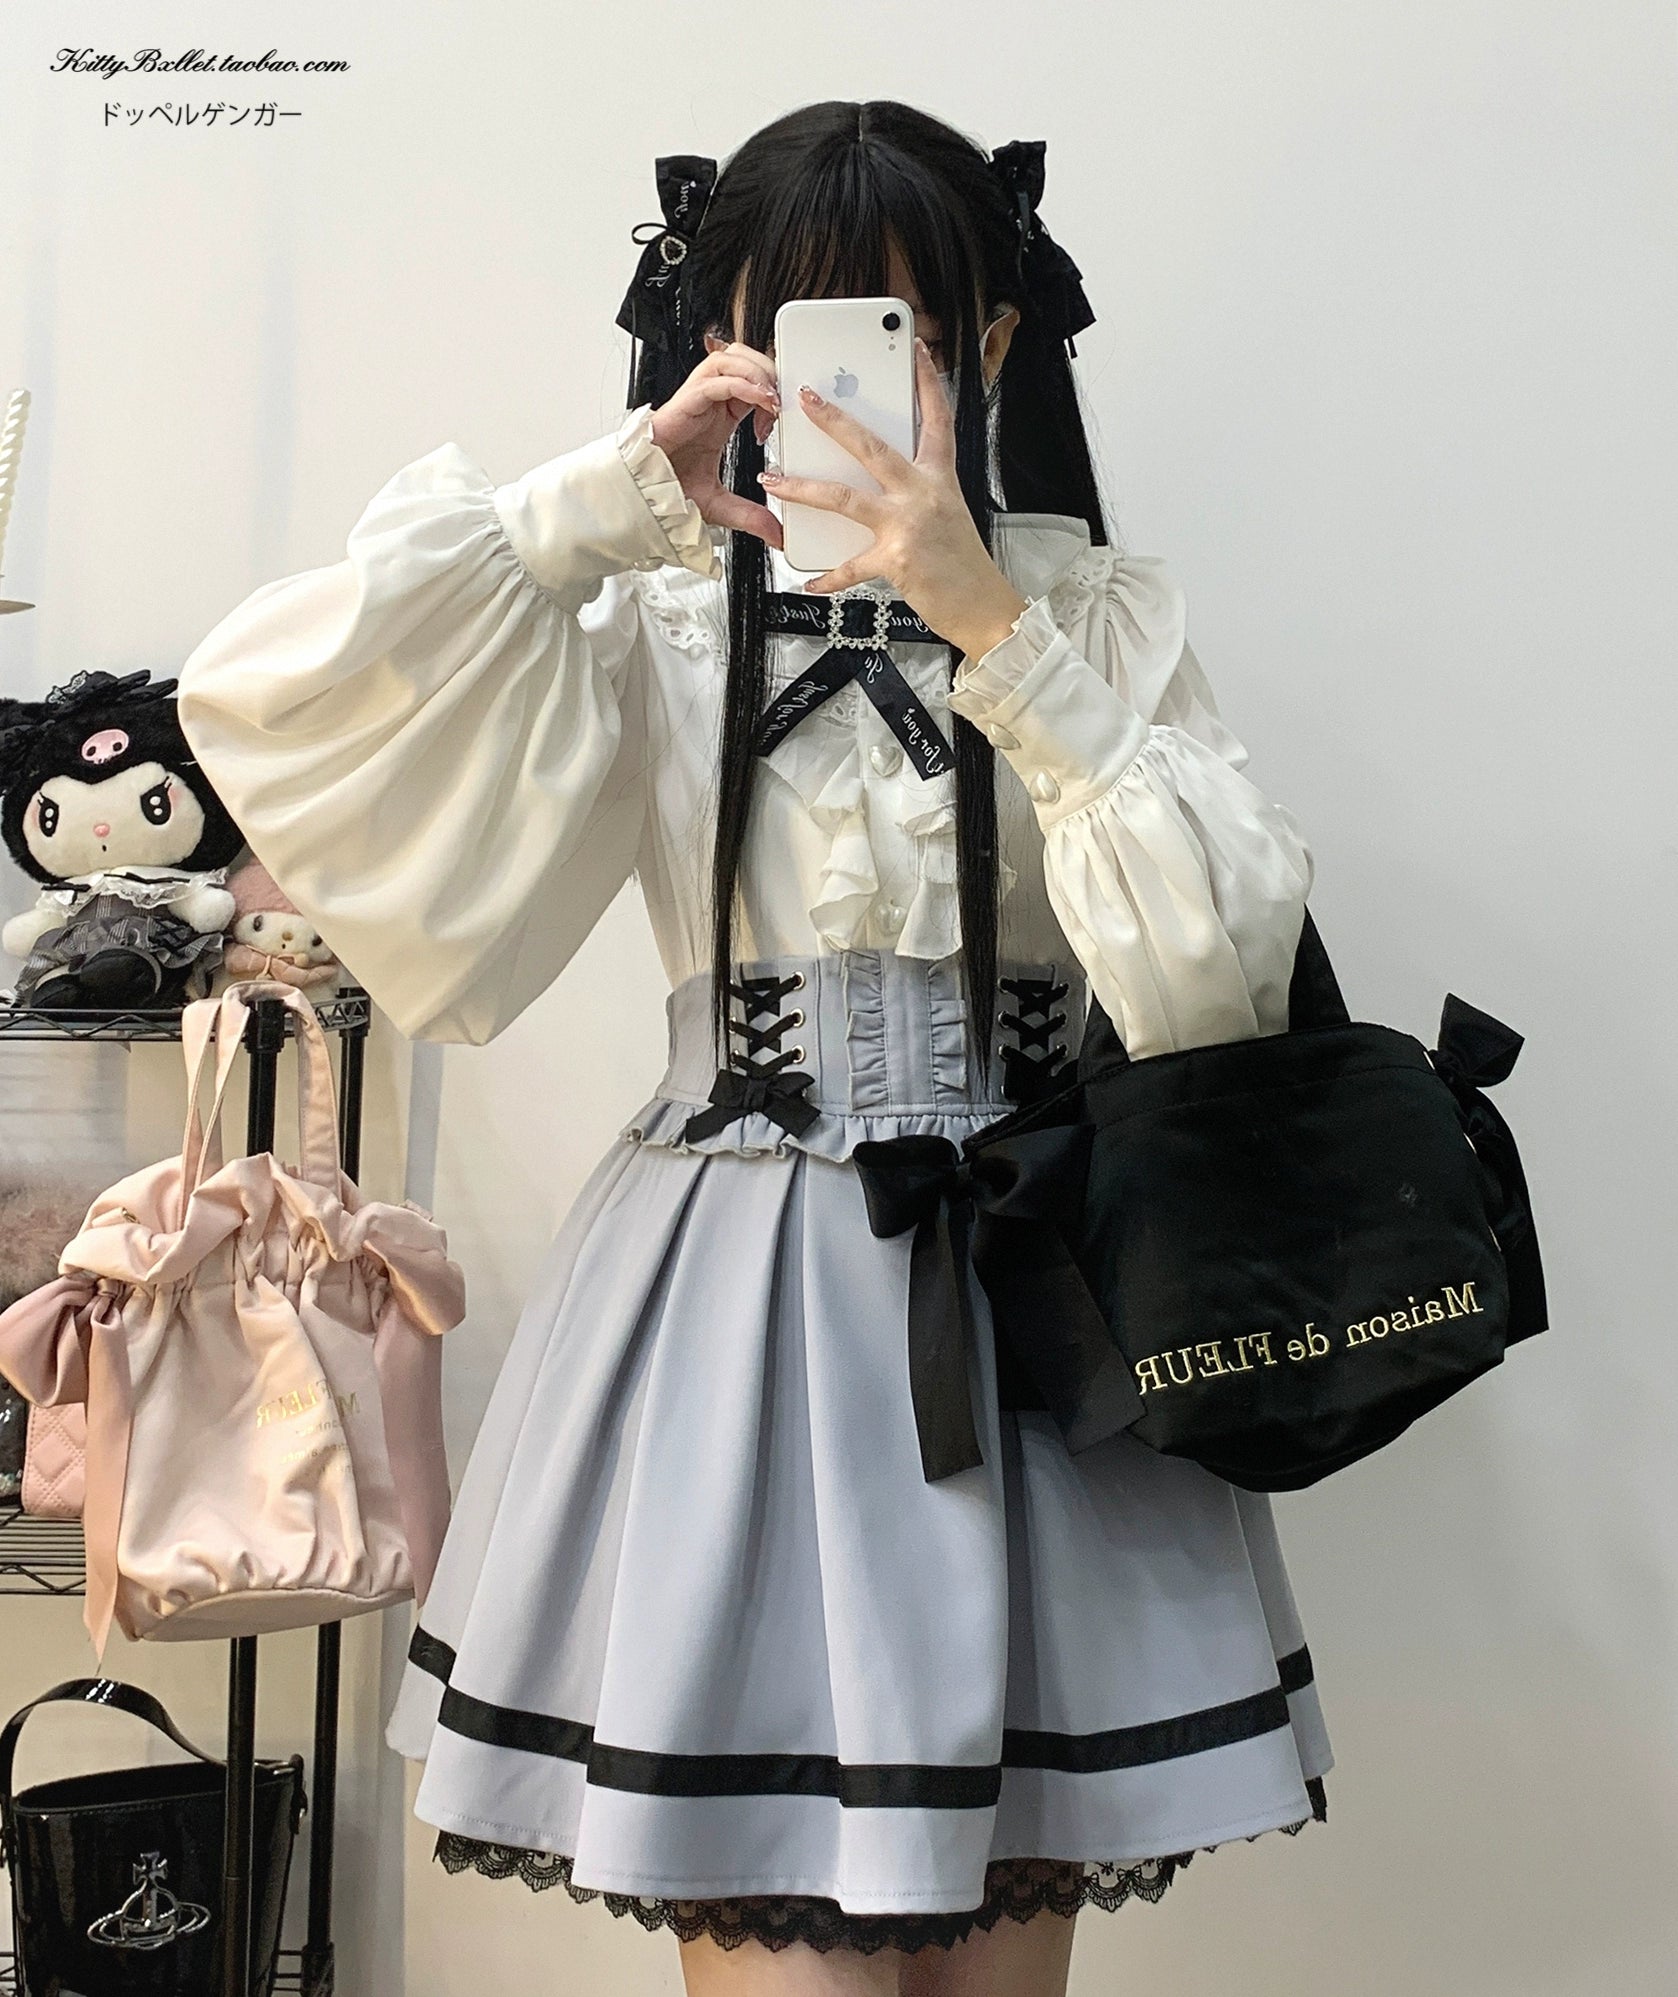 Jirai Kei Skirt High Waist Lace Up Skirt With Bow Tie 31860:396600